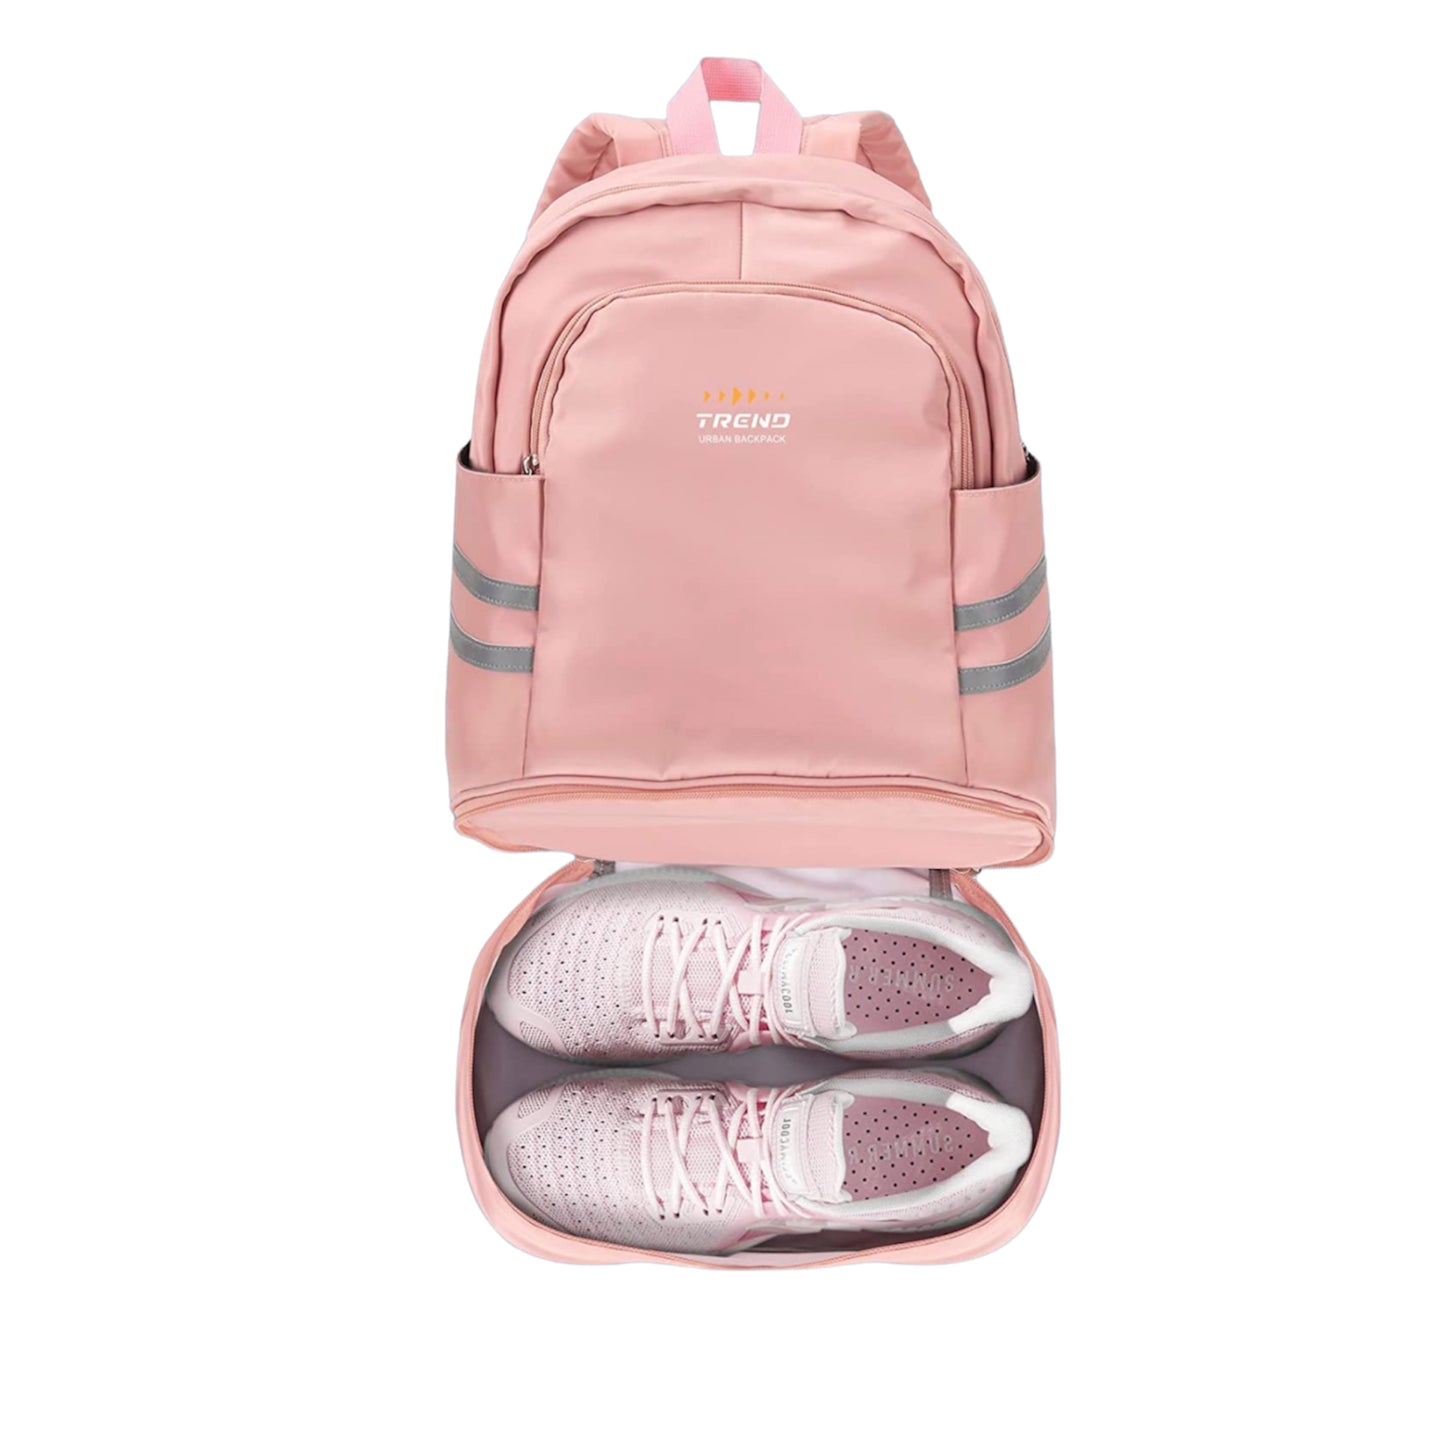 Pretty in pink gym bag